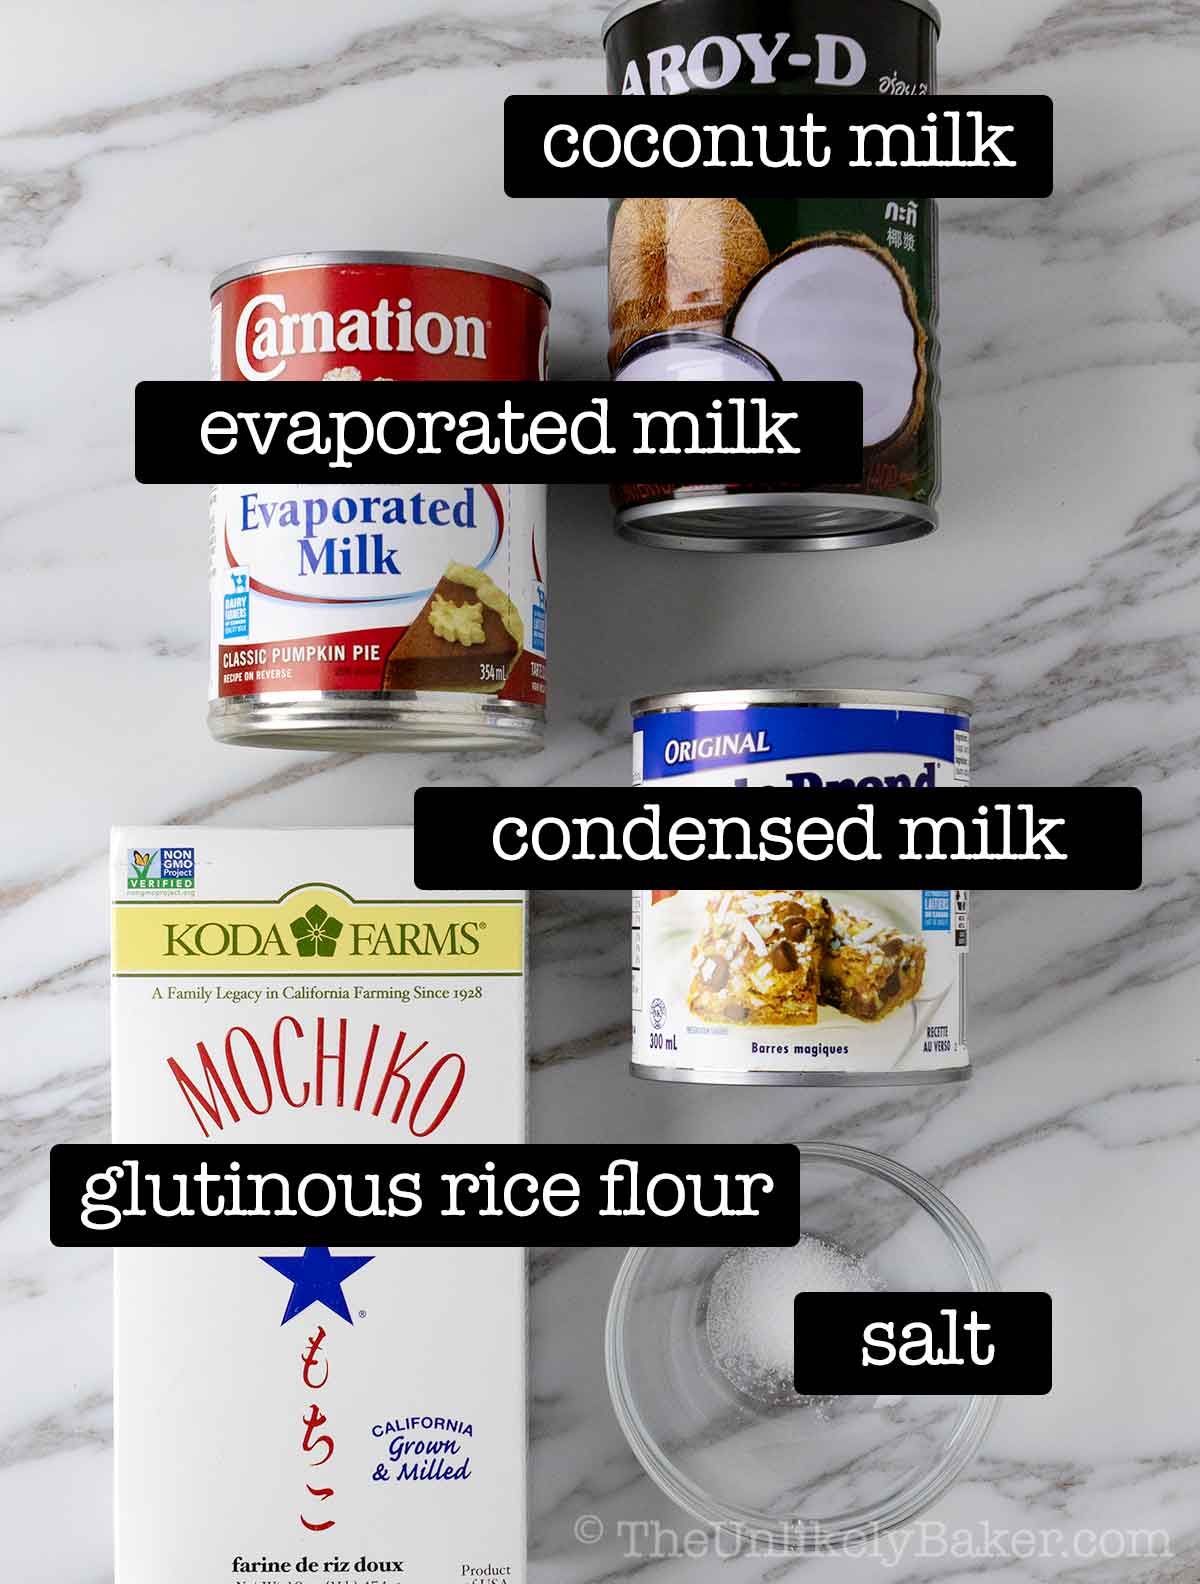 Espasol ingredients with text overlay.